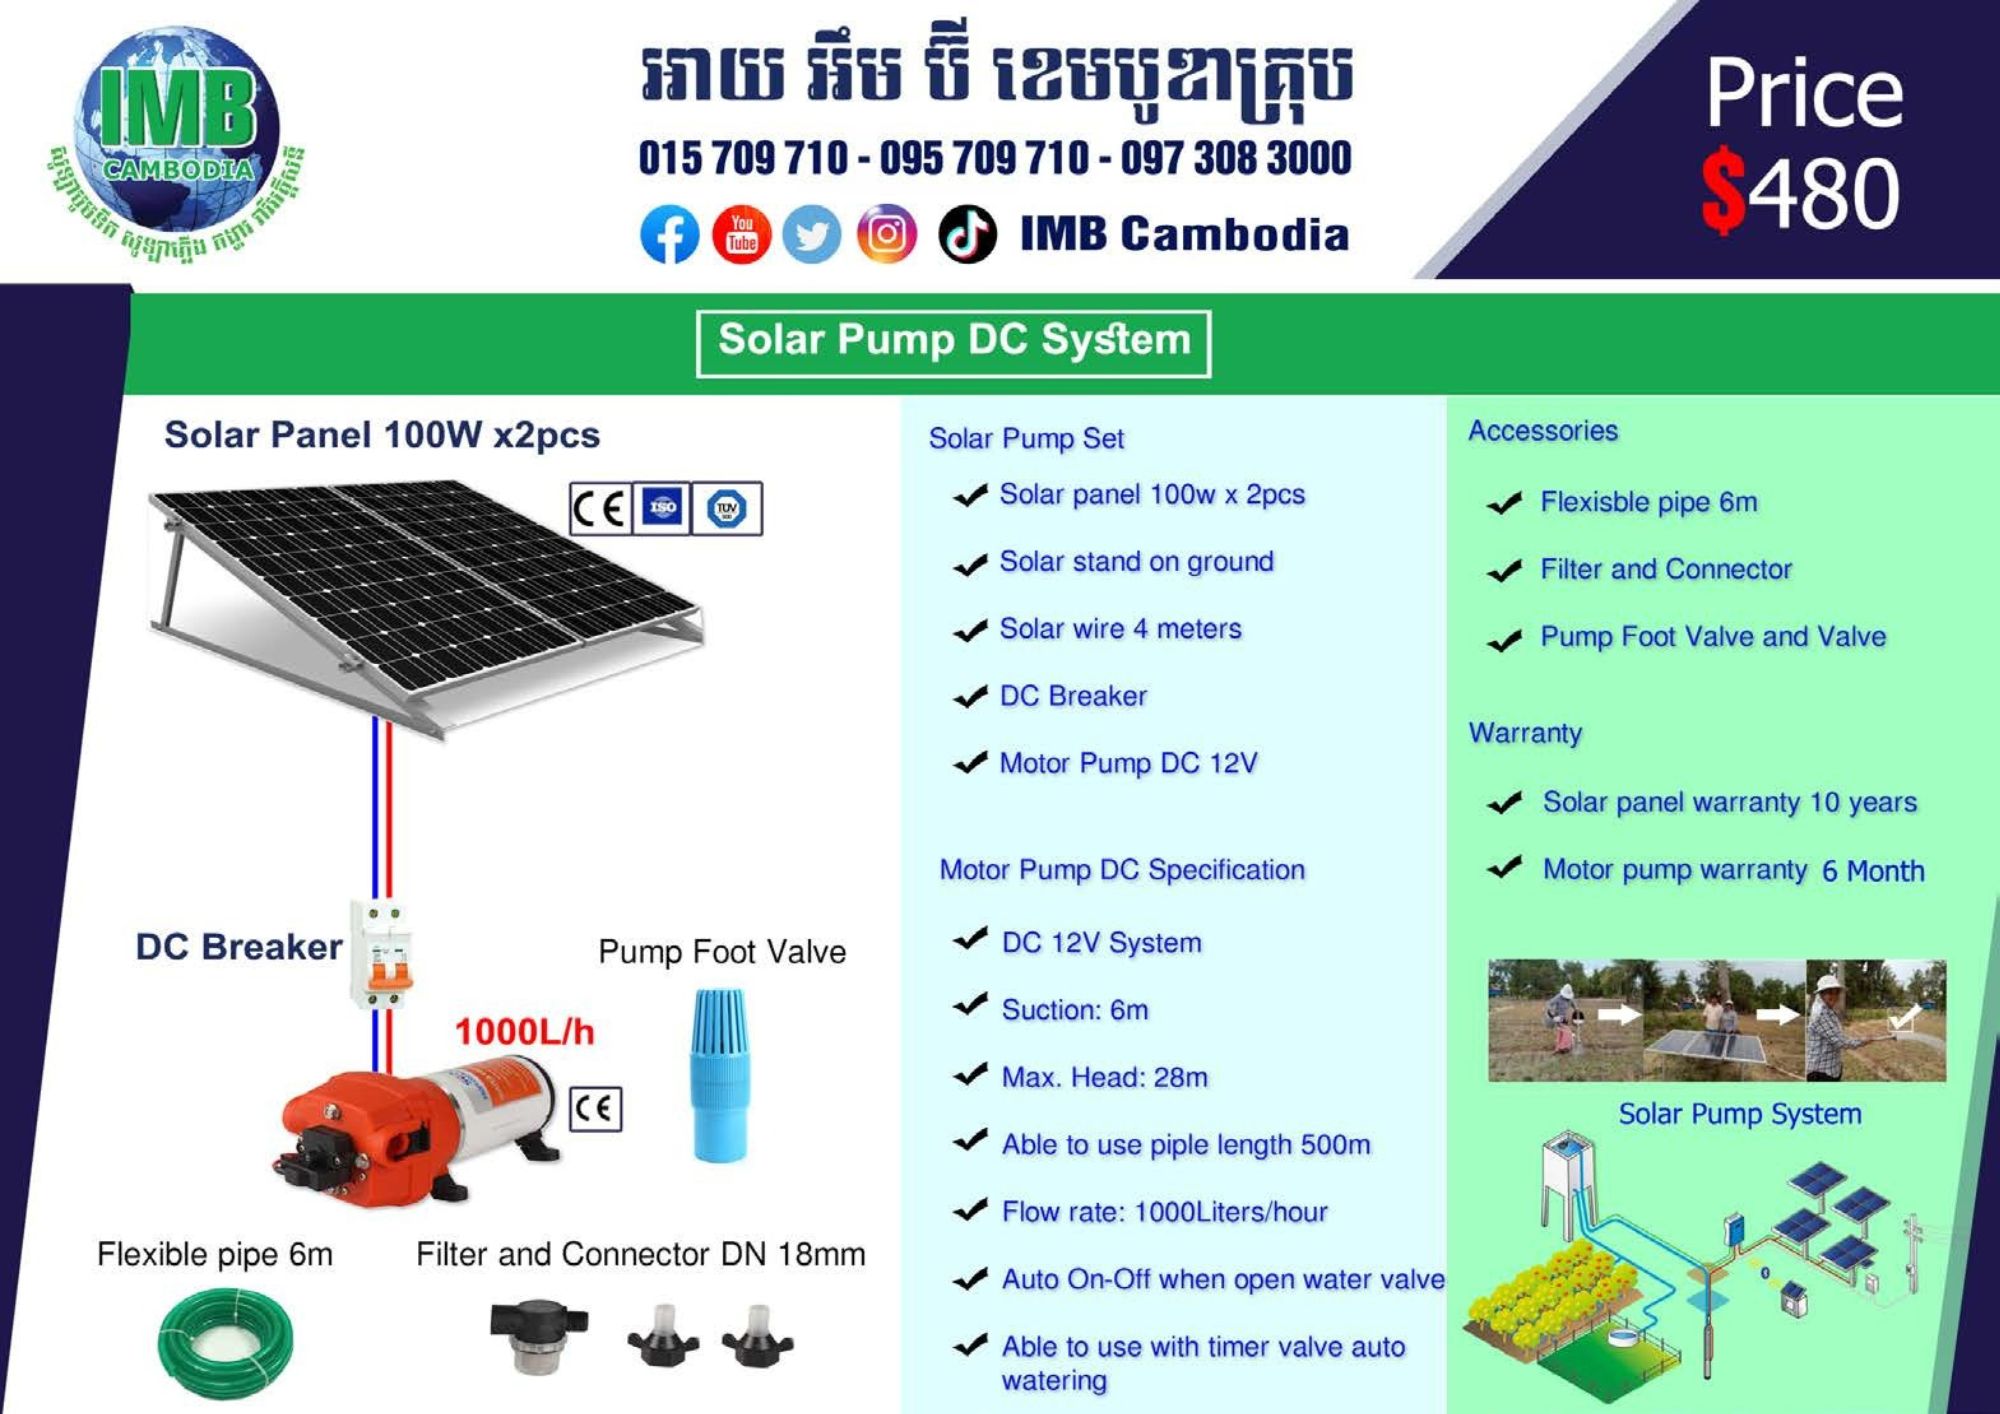 1-Store Type Solar Pump System